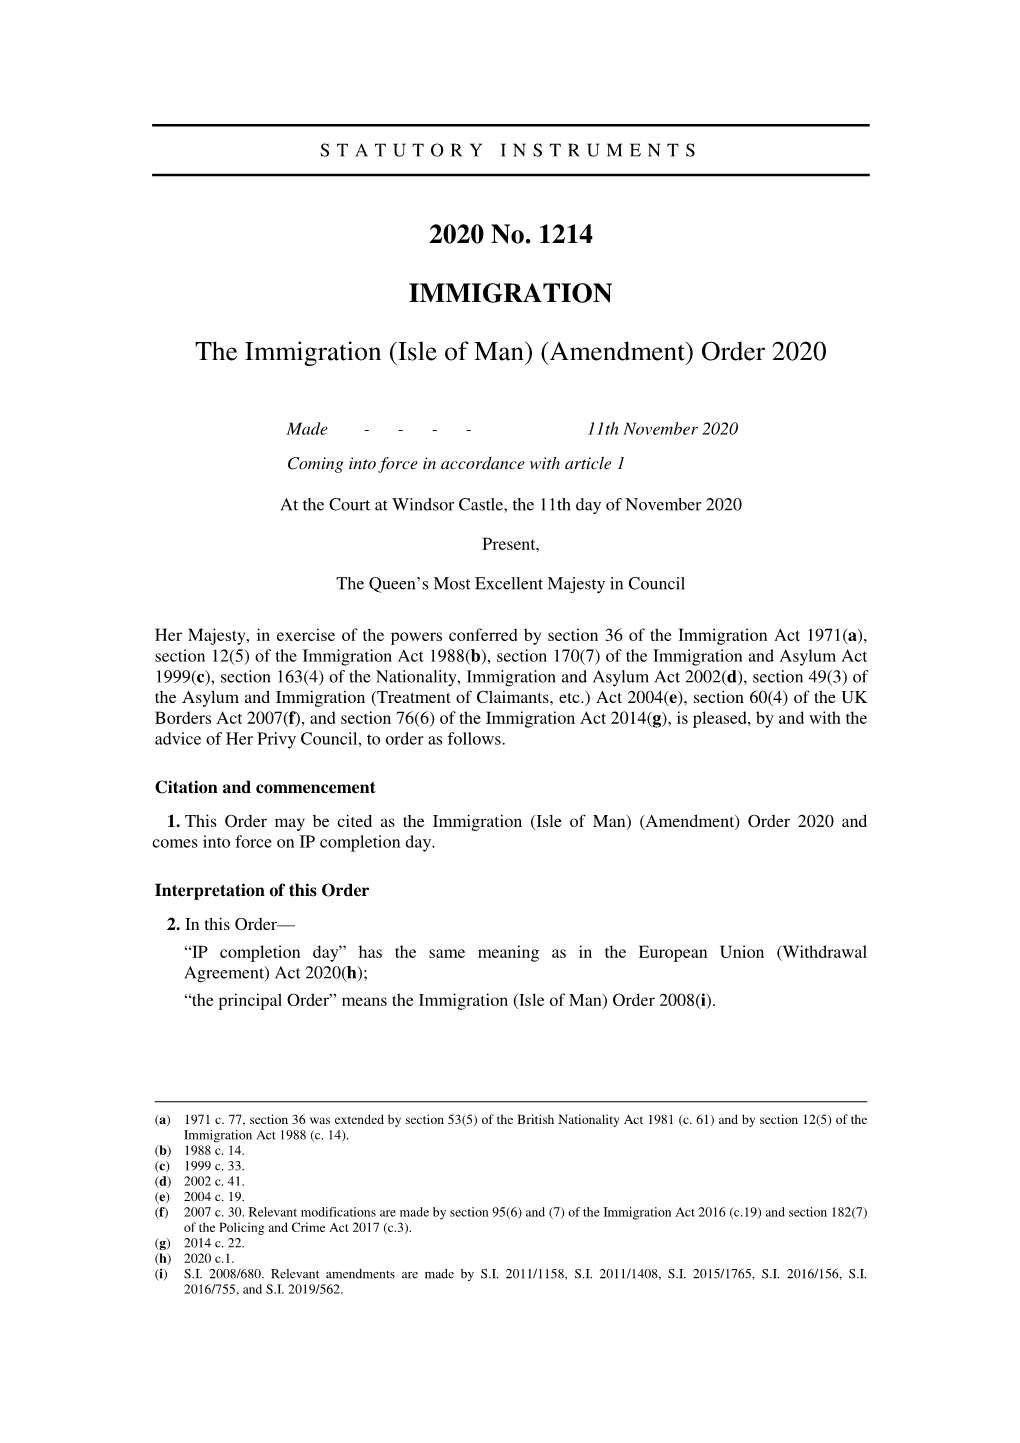 The Immigration (Isle of Man) (Amendment) Order 2020